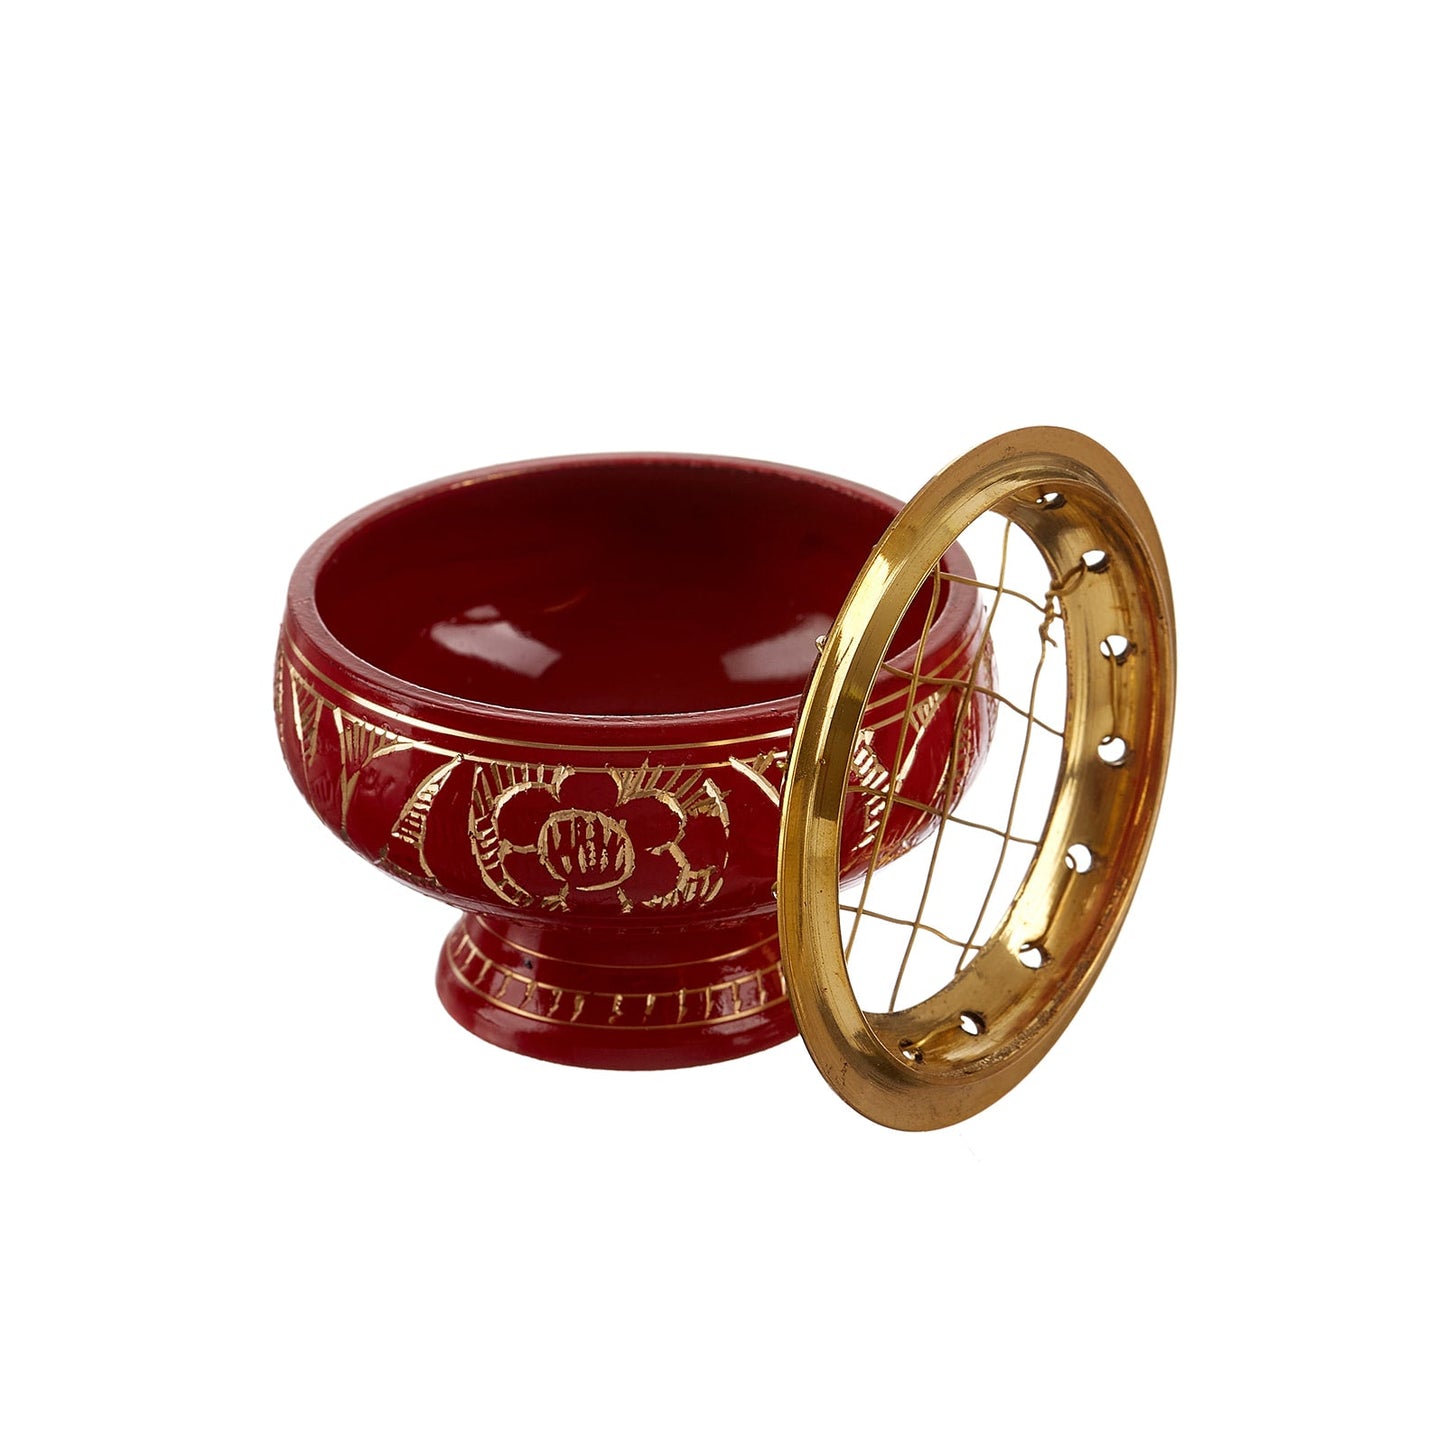 Brass incense burner in red colour